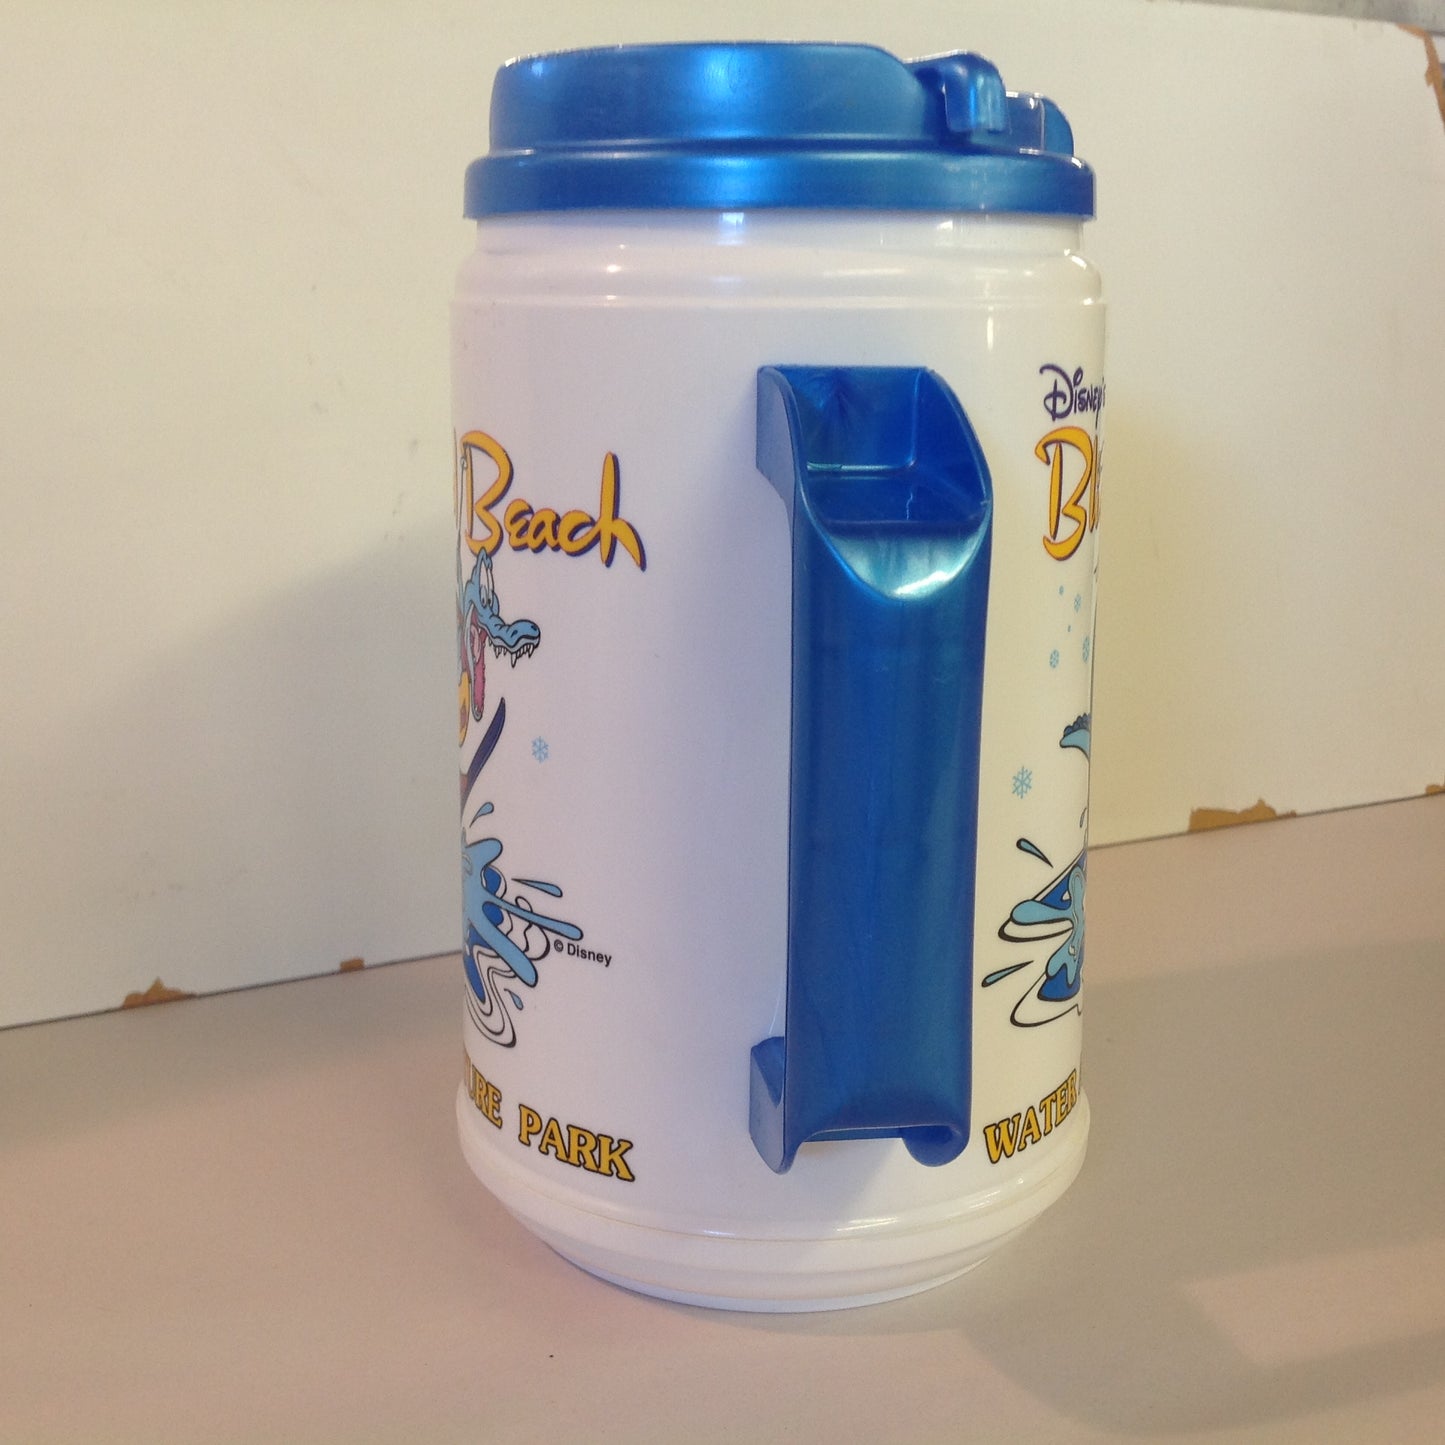 Vintage 1990's Disney's Blizzard Beach Water Adventure Park Hot Cold Plastic Drink Mug